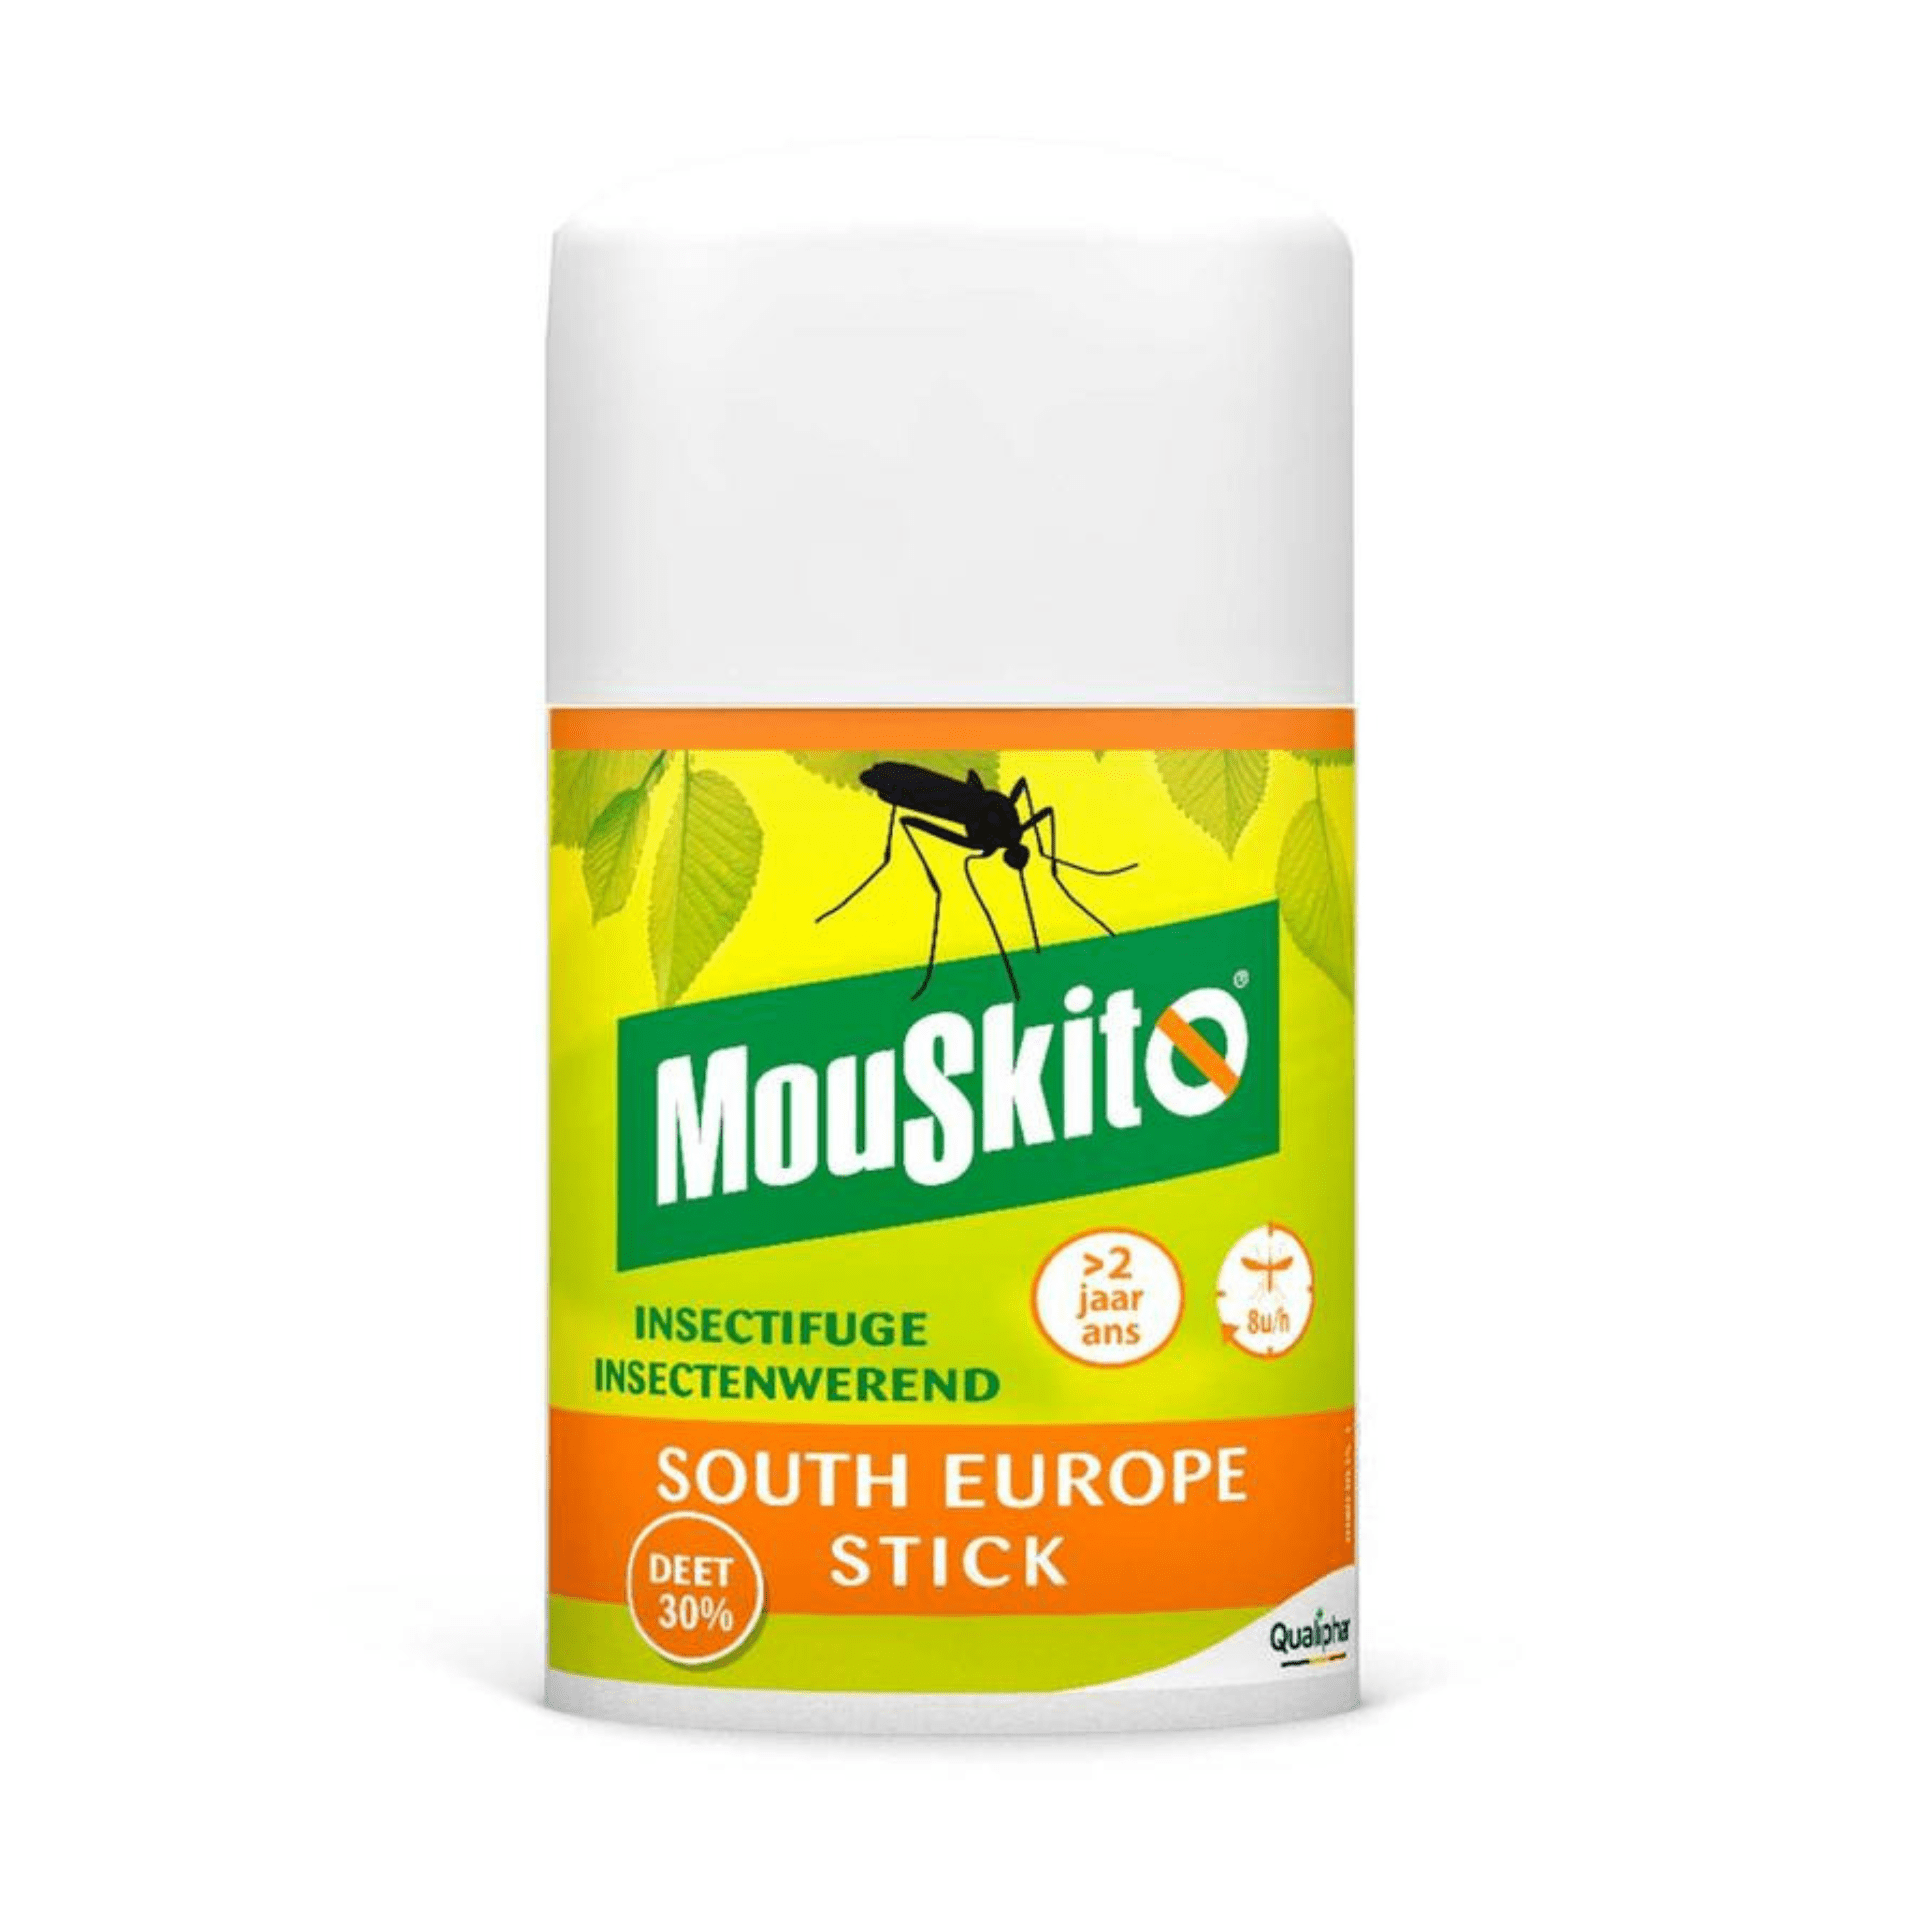 Mouskito South Europe Stick 